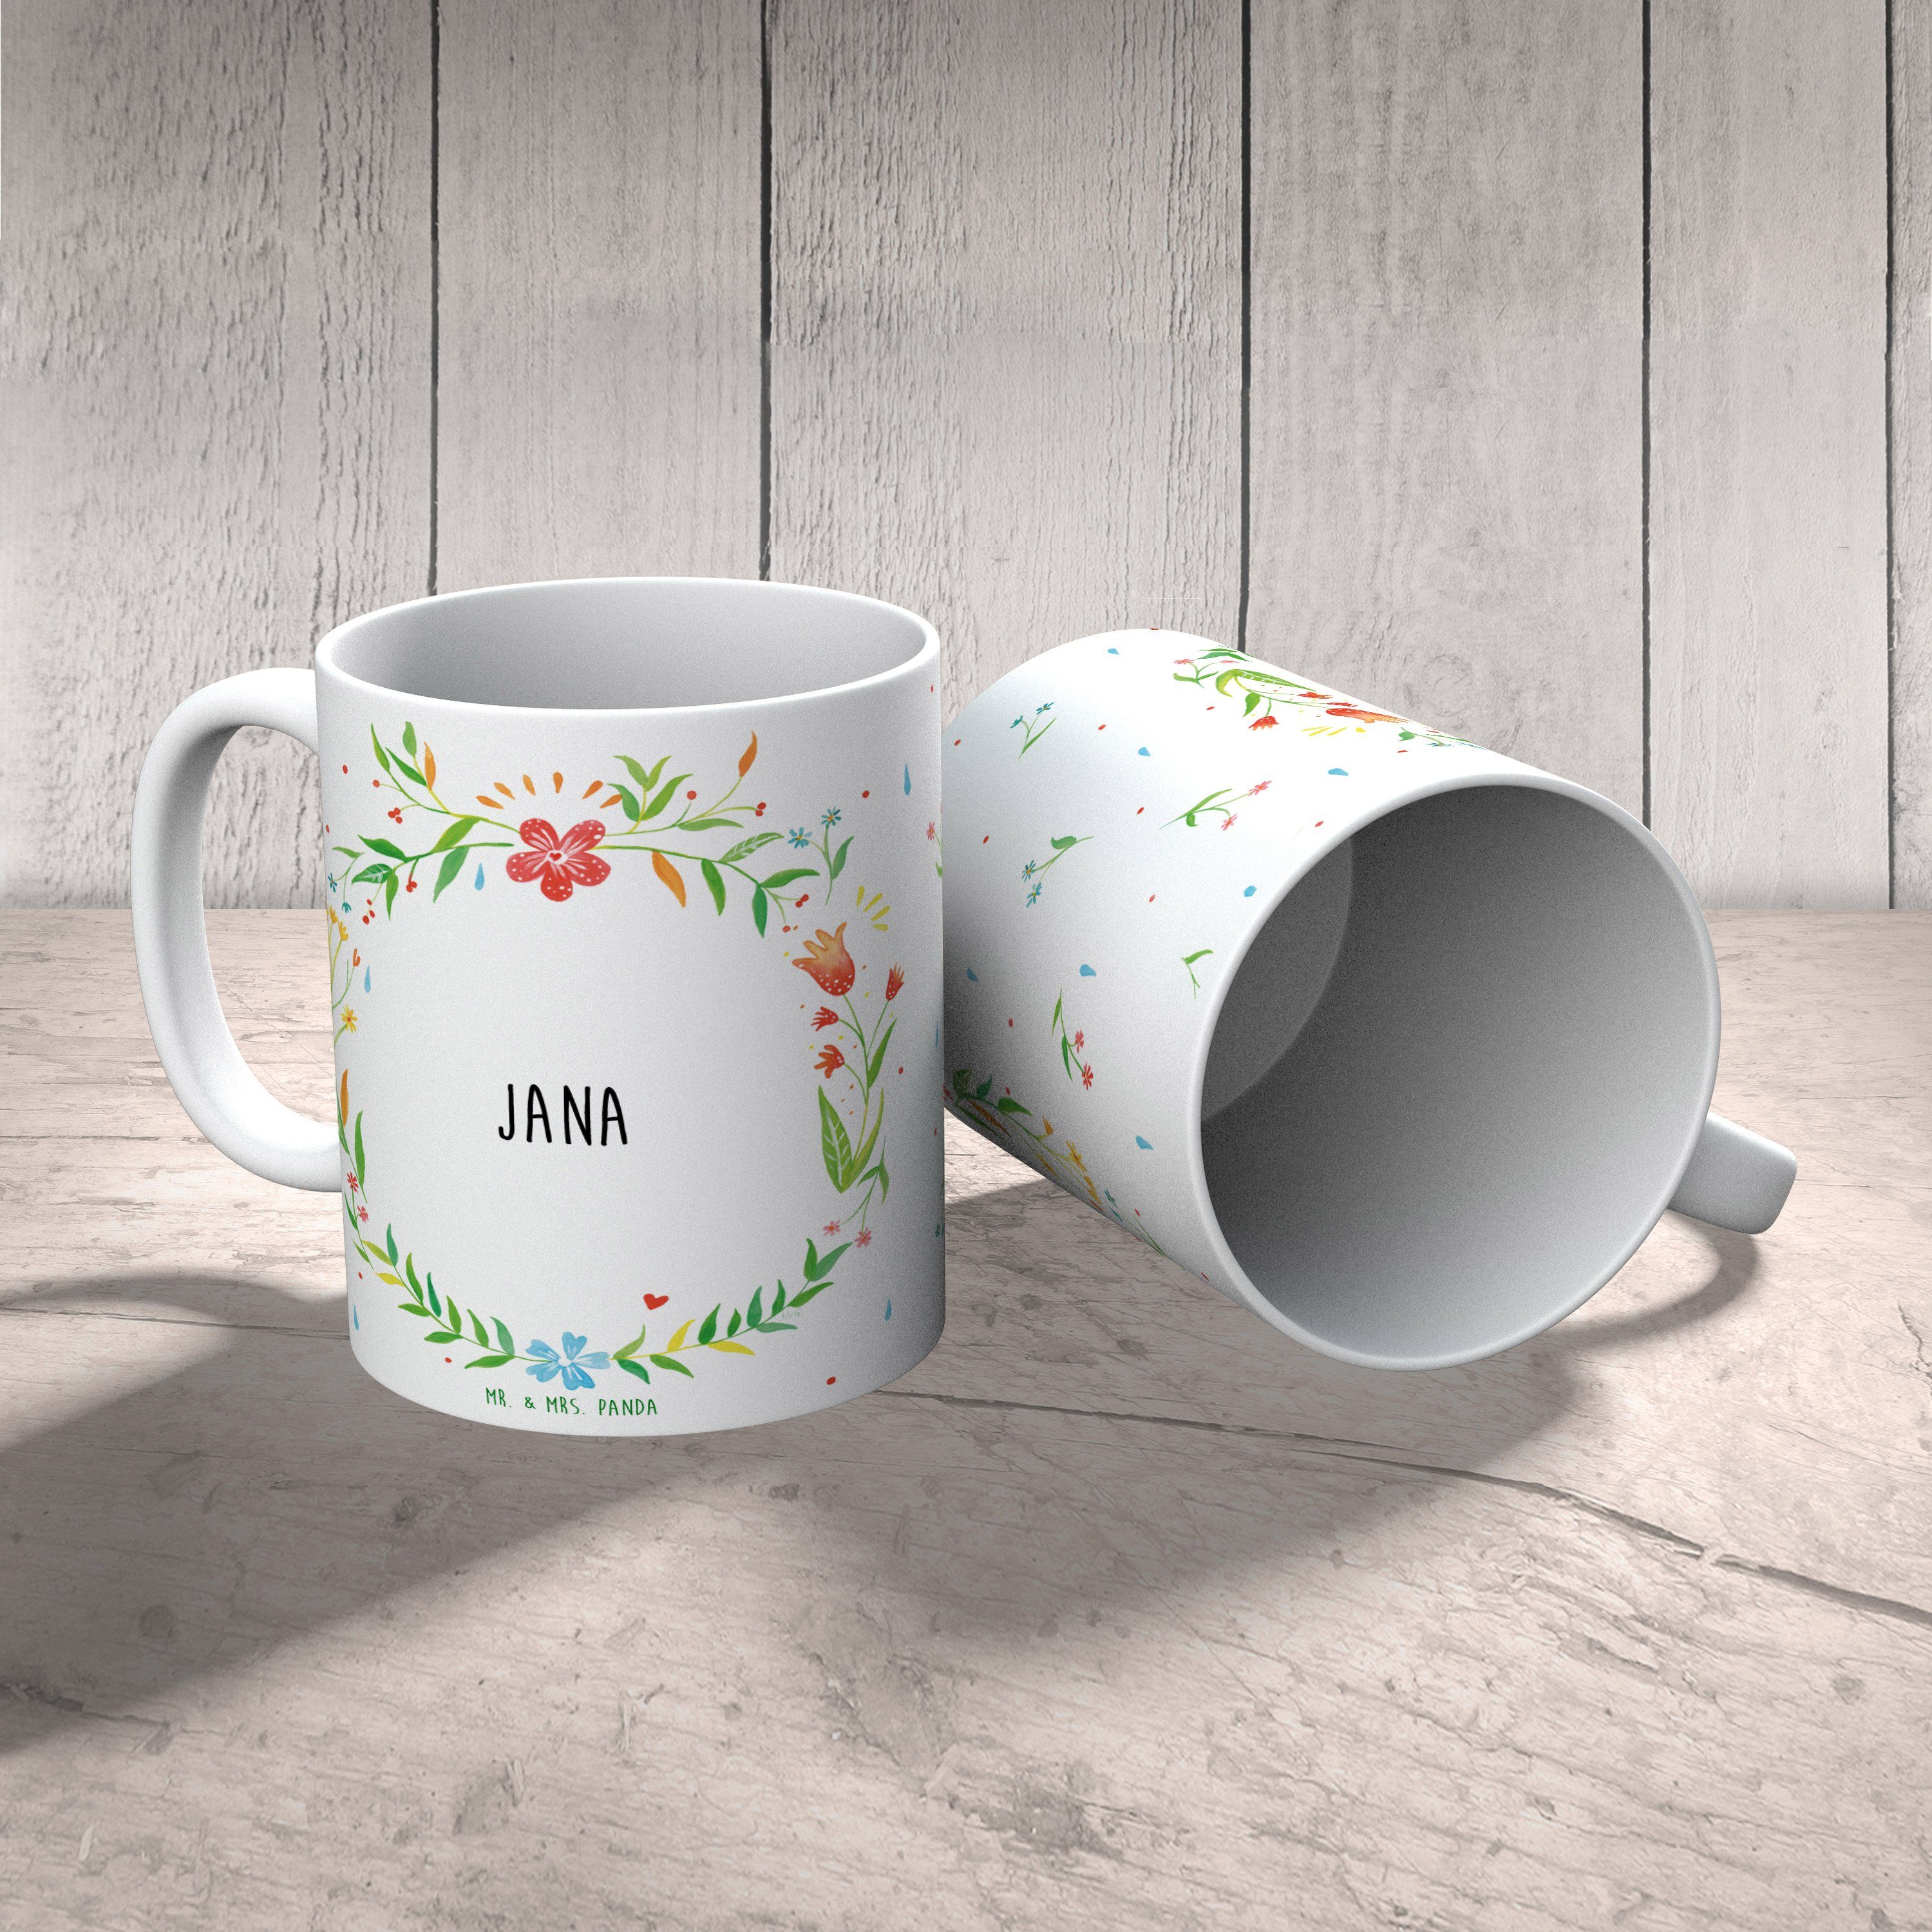 Keramik Jana Mrs. Tasse Mr. Panda Kaffeebecher, Motive, Geschenk, & P, - Kaffeetasse, Teetasse, Tasse